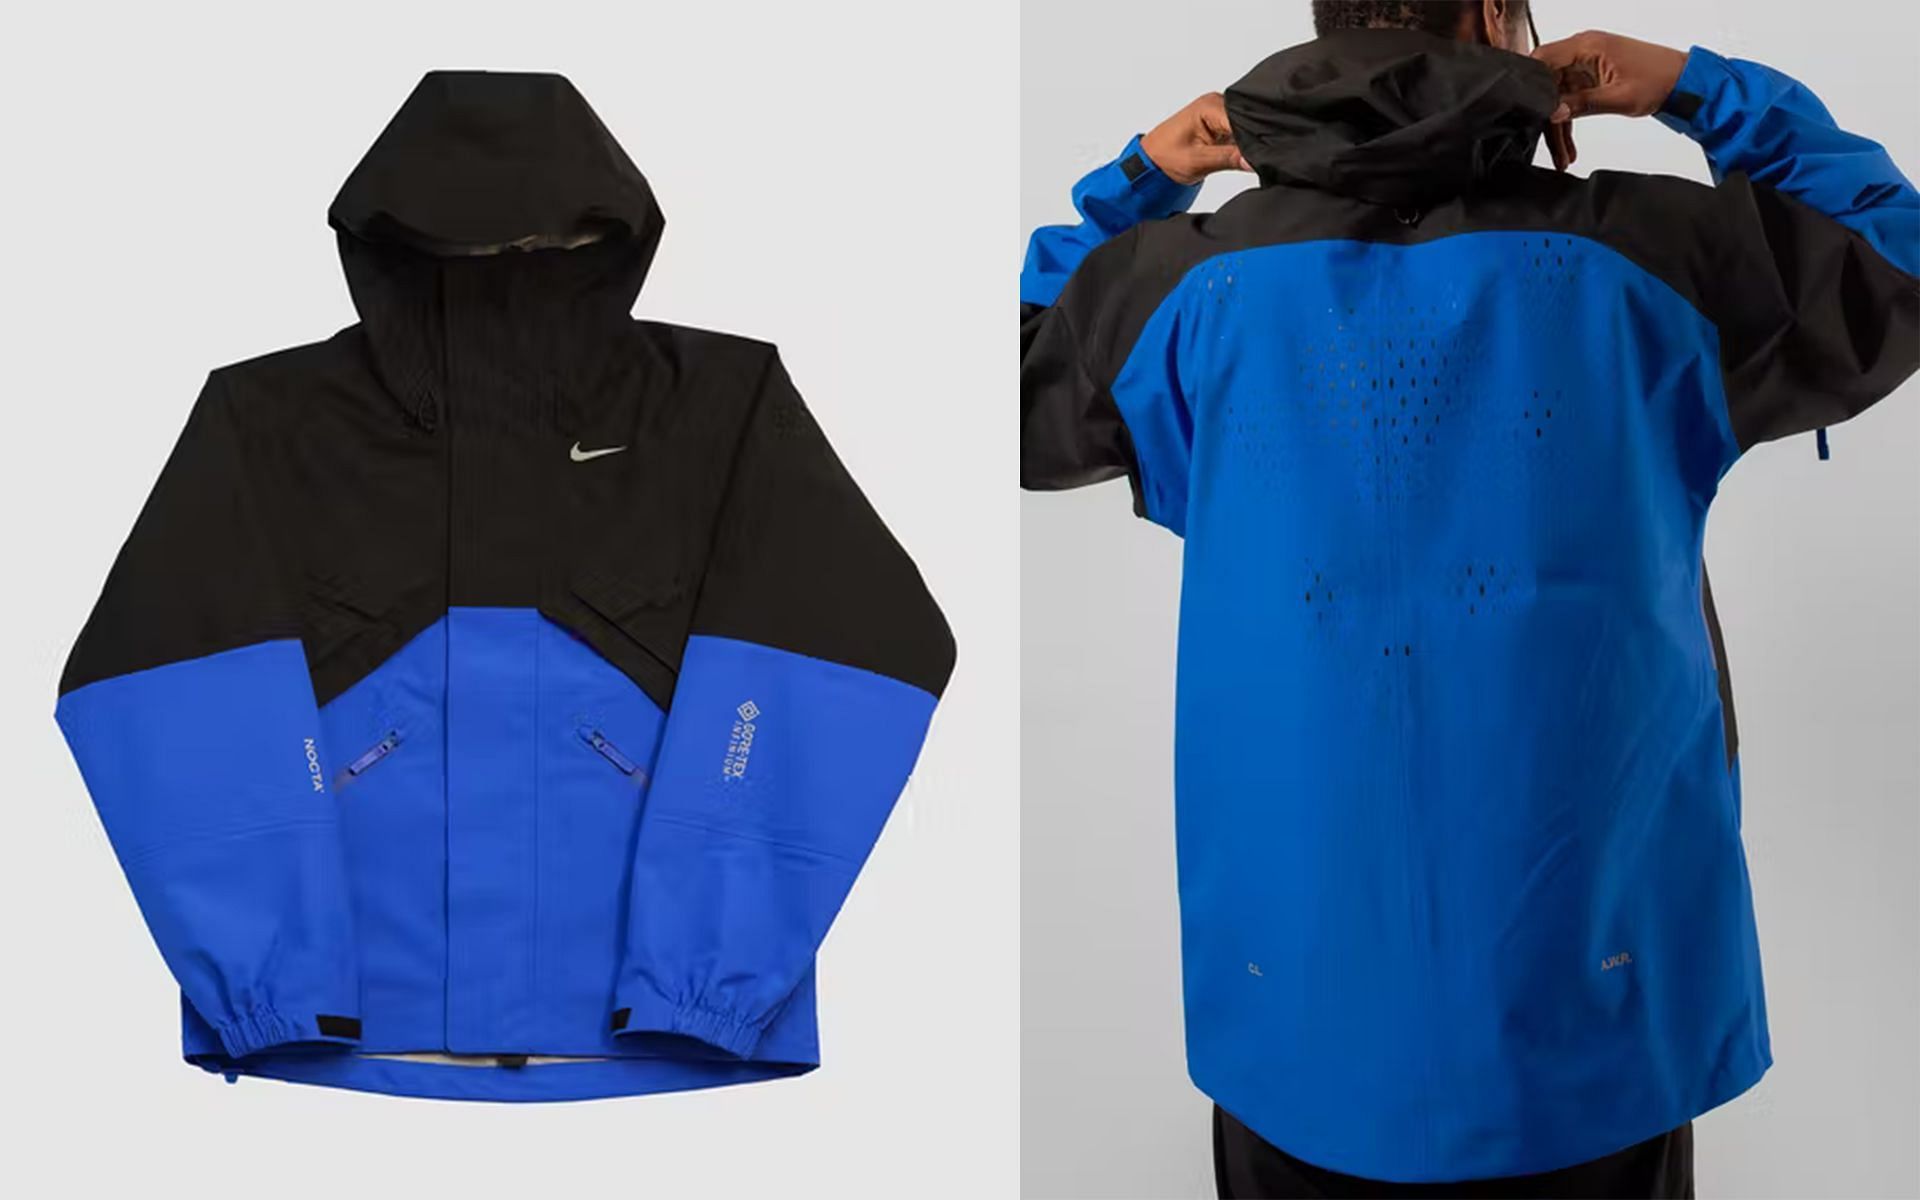 How to buy the Top Boy x Nike NOCTA Alien Gortex jacket? Price